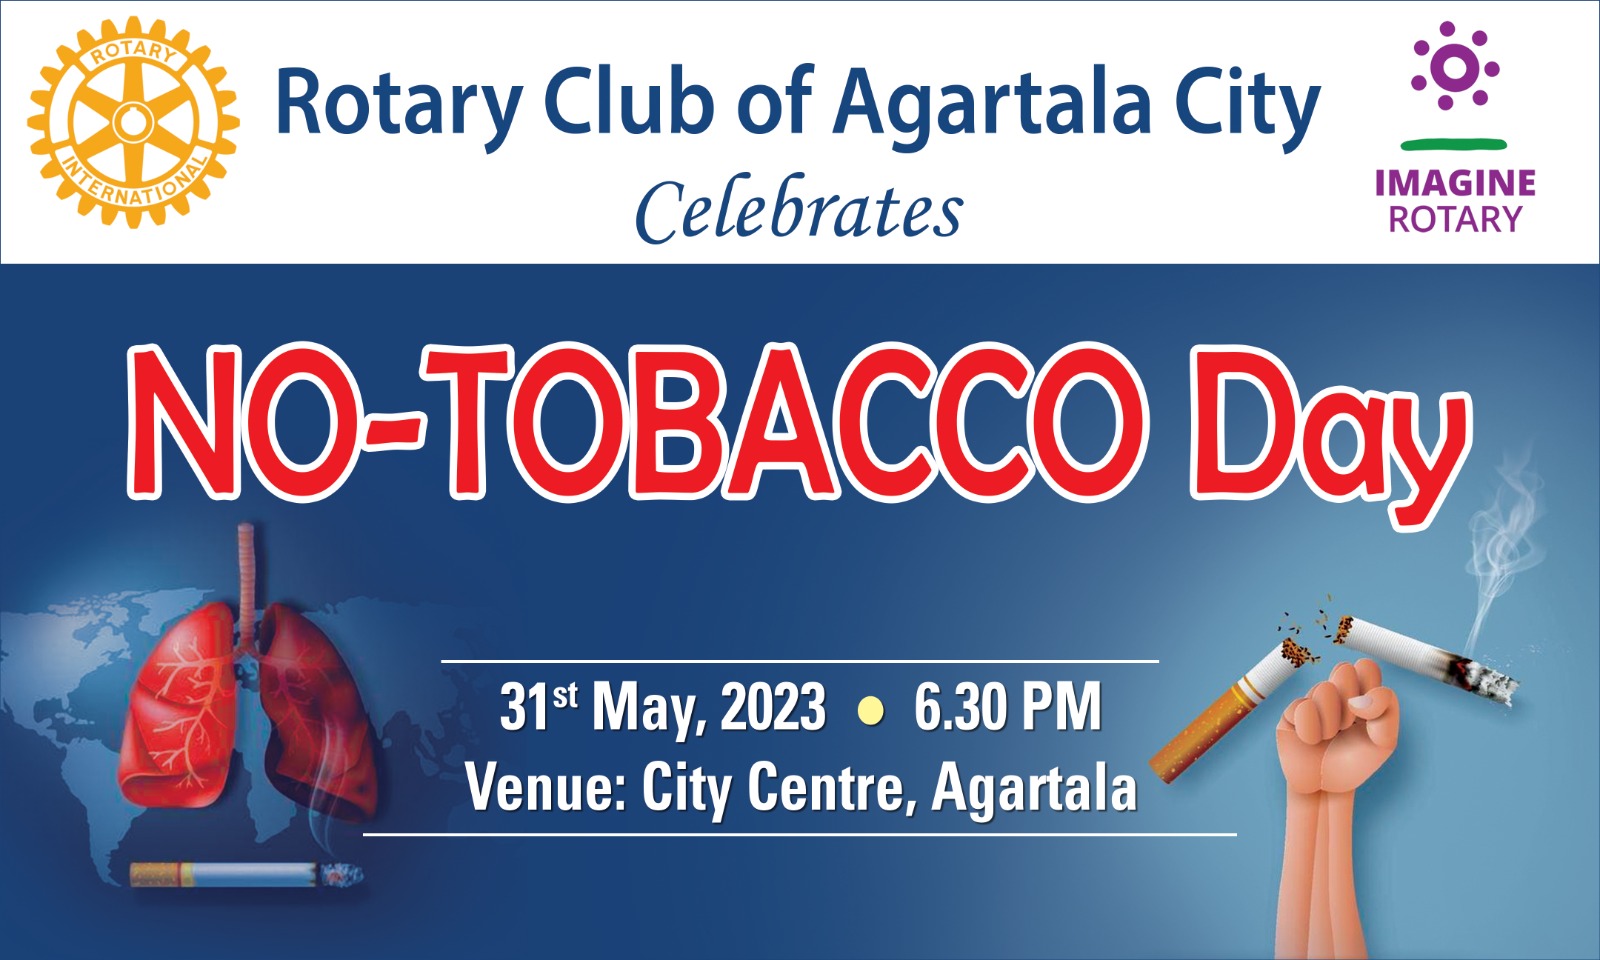 RCAC No-Tobacco Day on 31st May 2023 at Agartala City Centre.